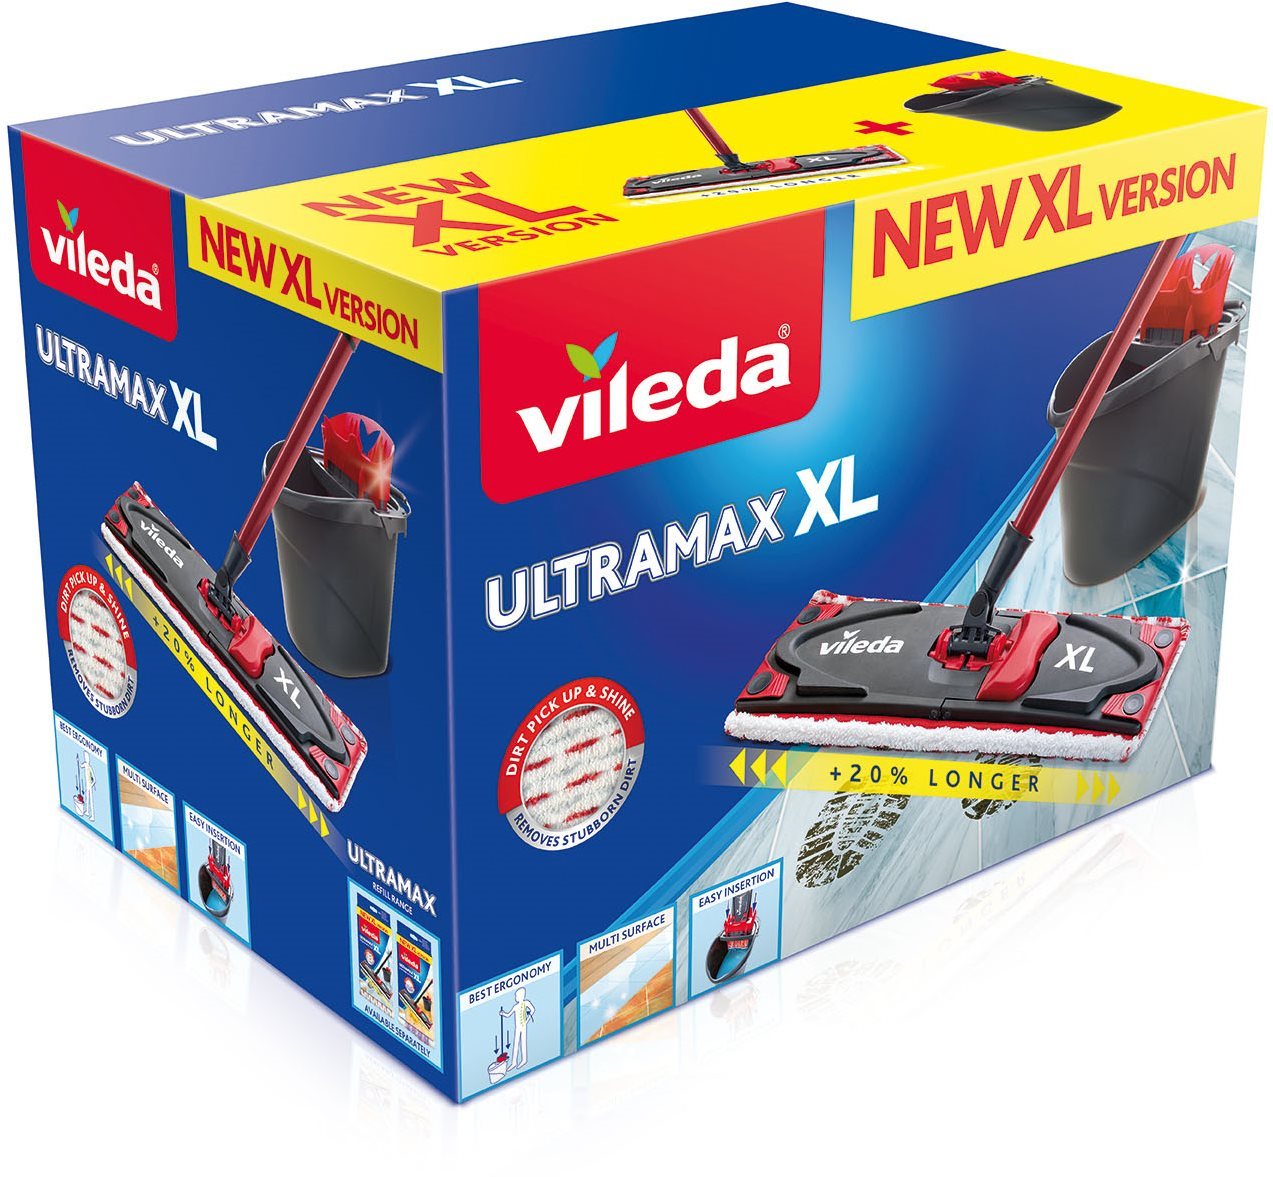 VILEDA Ultramax XL szett Box Microfiber 2in1